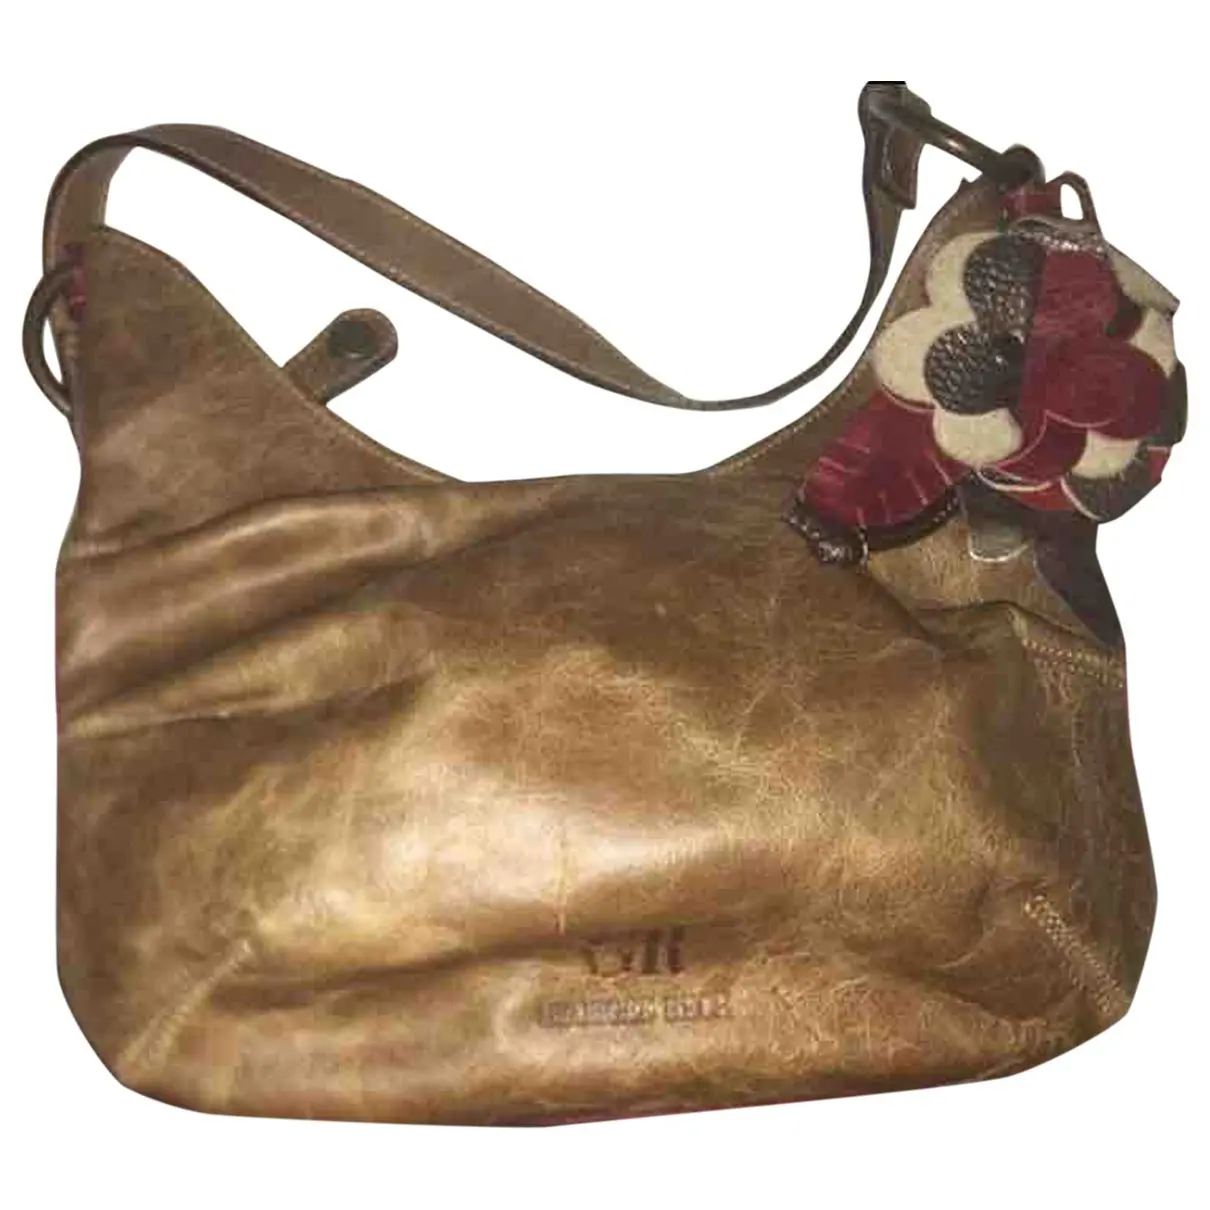 Leather handbag Georges Rech